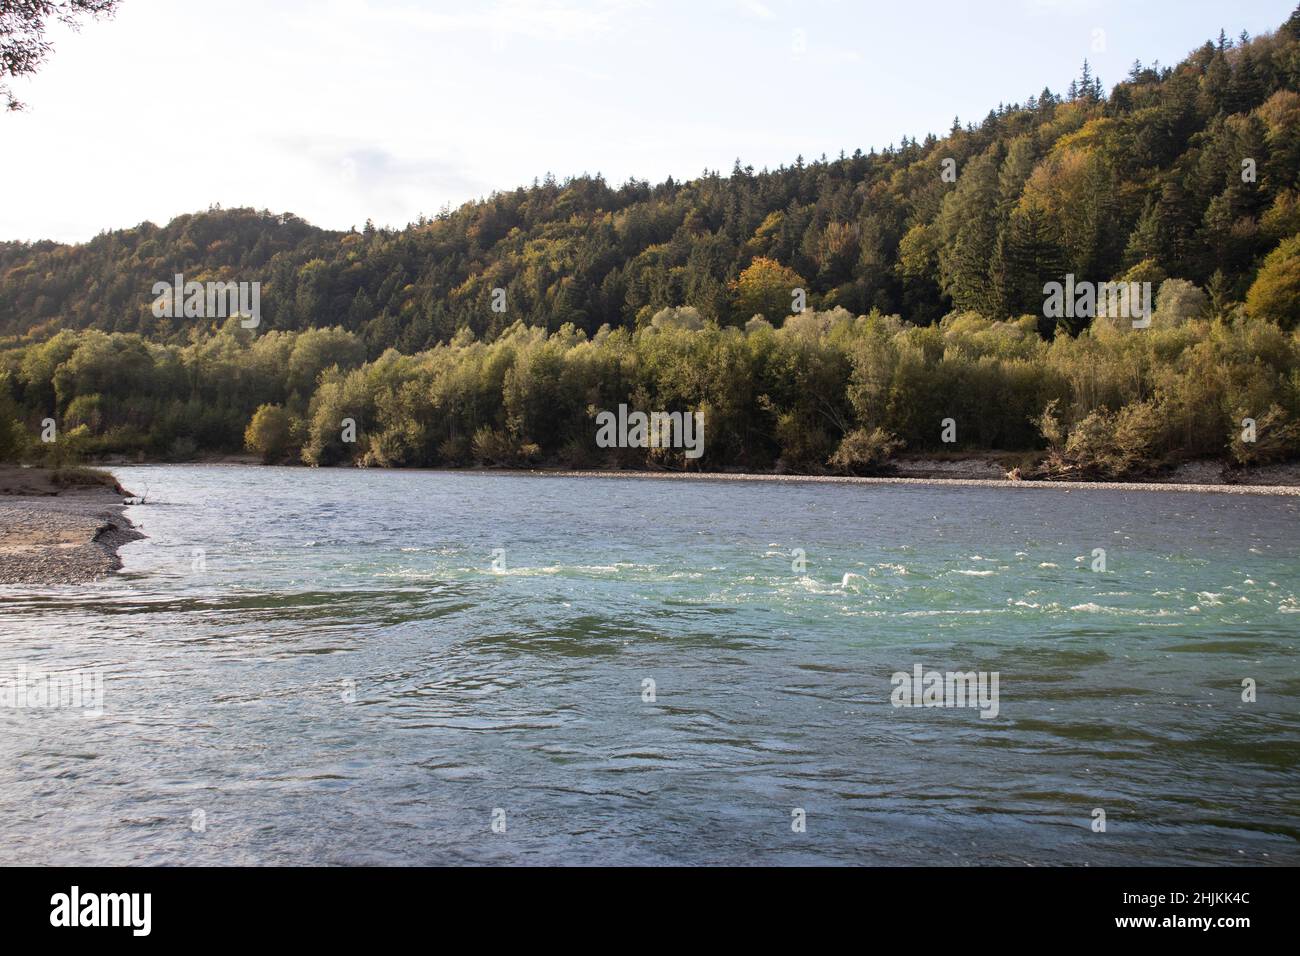 Blick vom Ufer des Lechs auf den Fluss Lech, der blau-grün leuchtet Banque D'Images